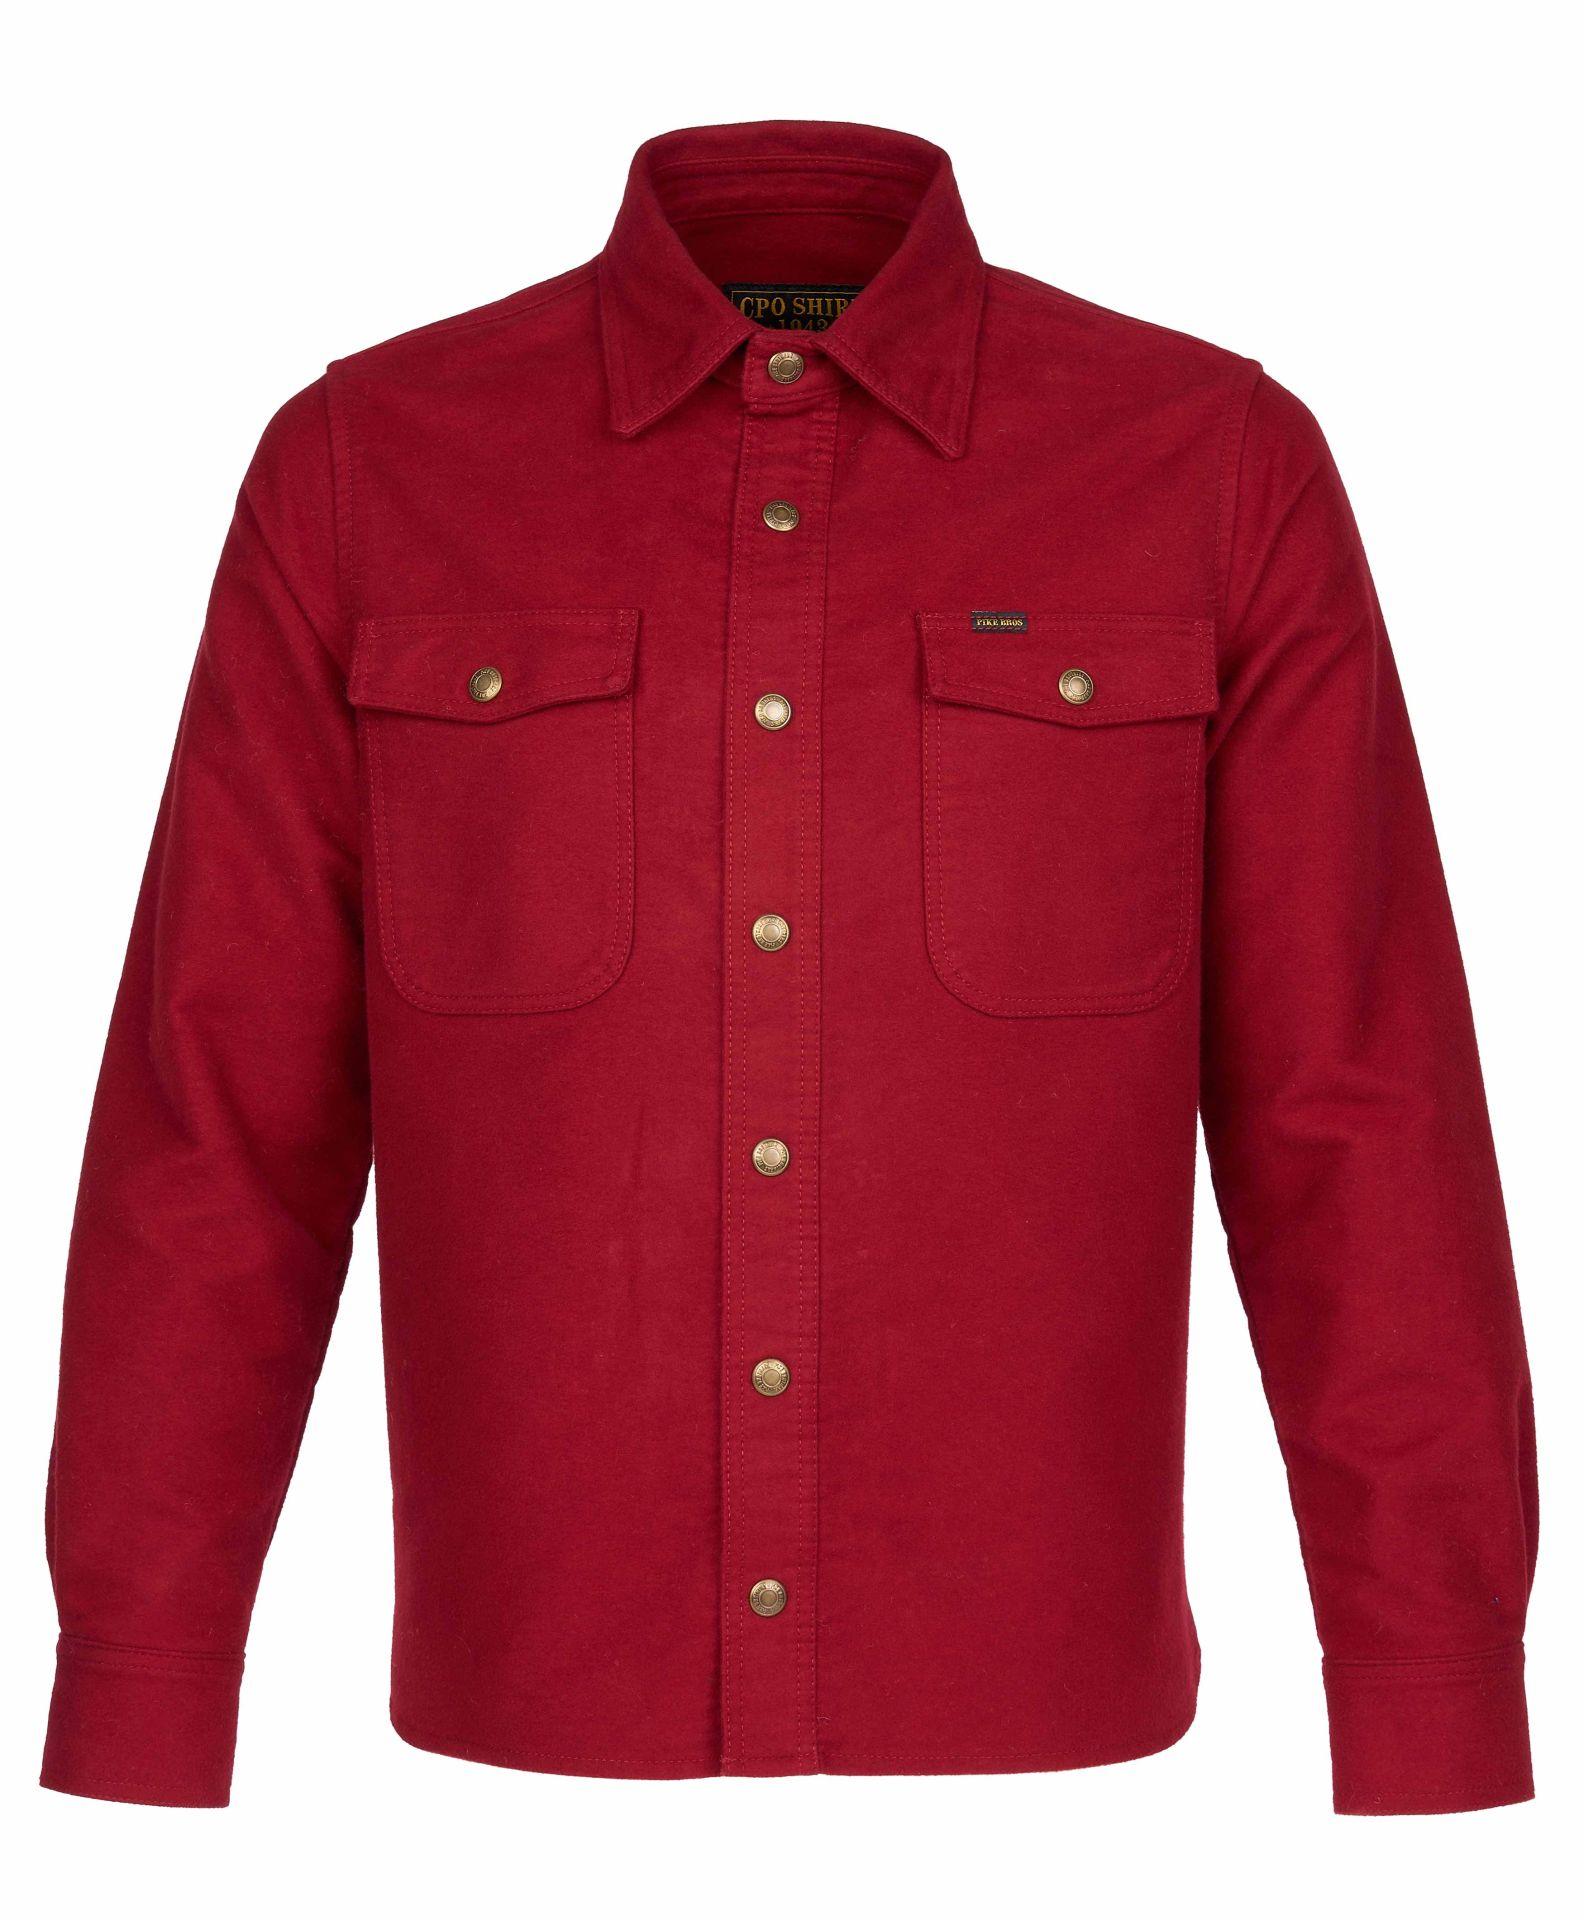 Pike Brothers Sobre camisa  1943 CPO Shirt Moleskin dark red